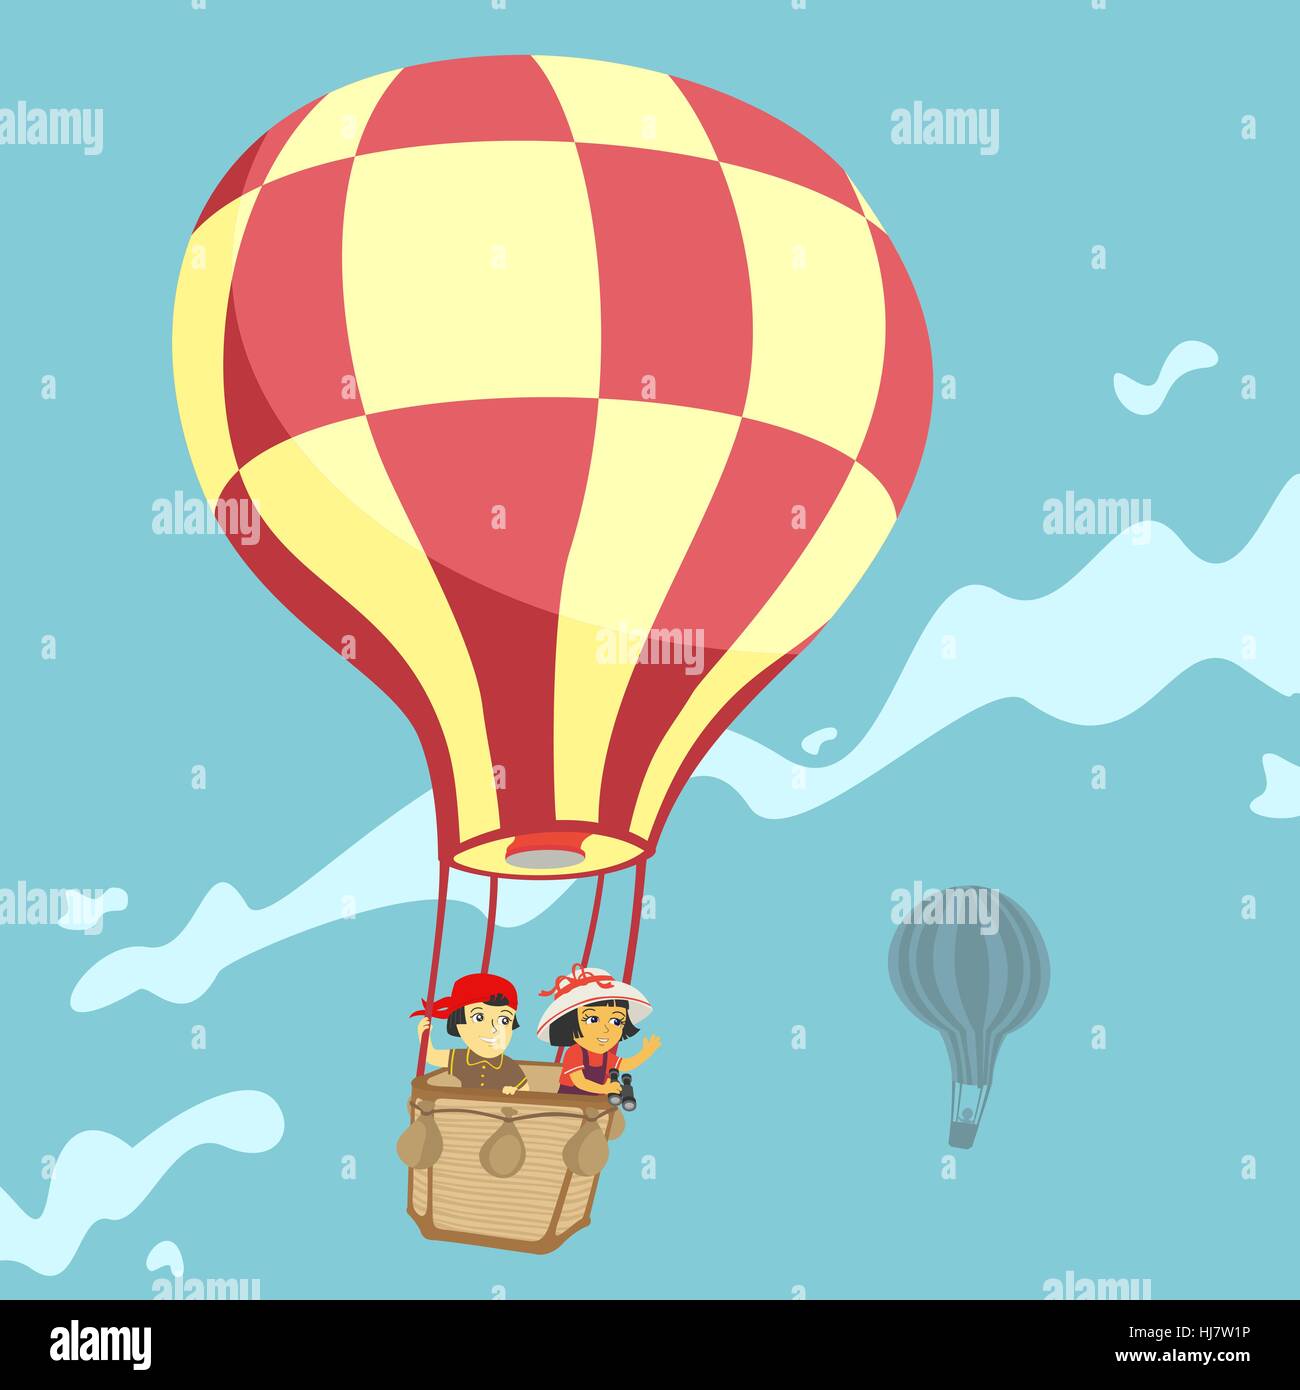 Children in a balloon Vector Illustration Stock Vector